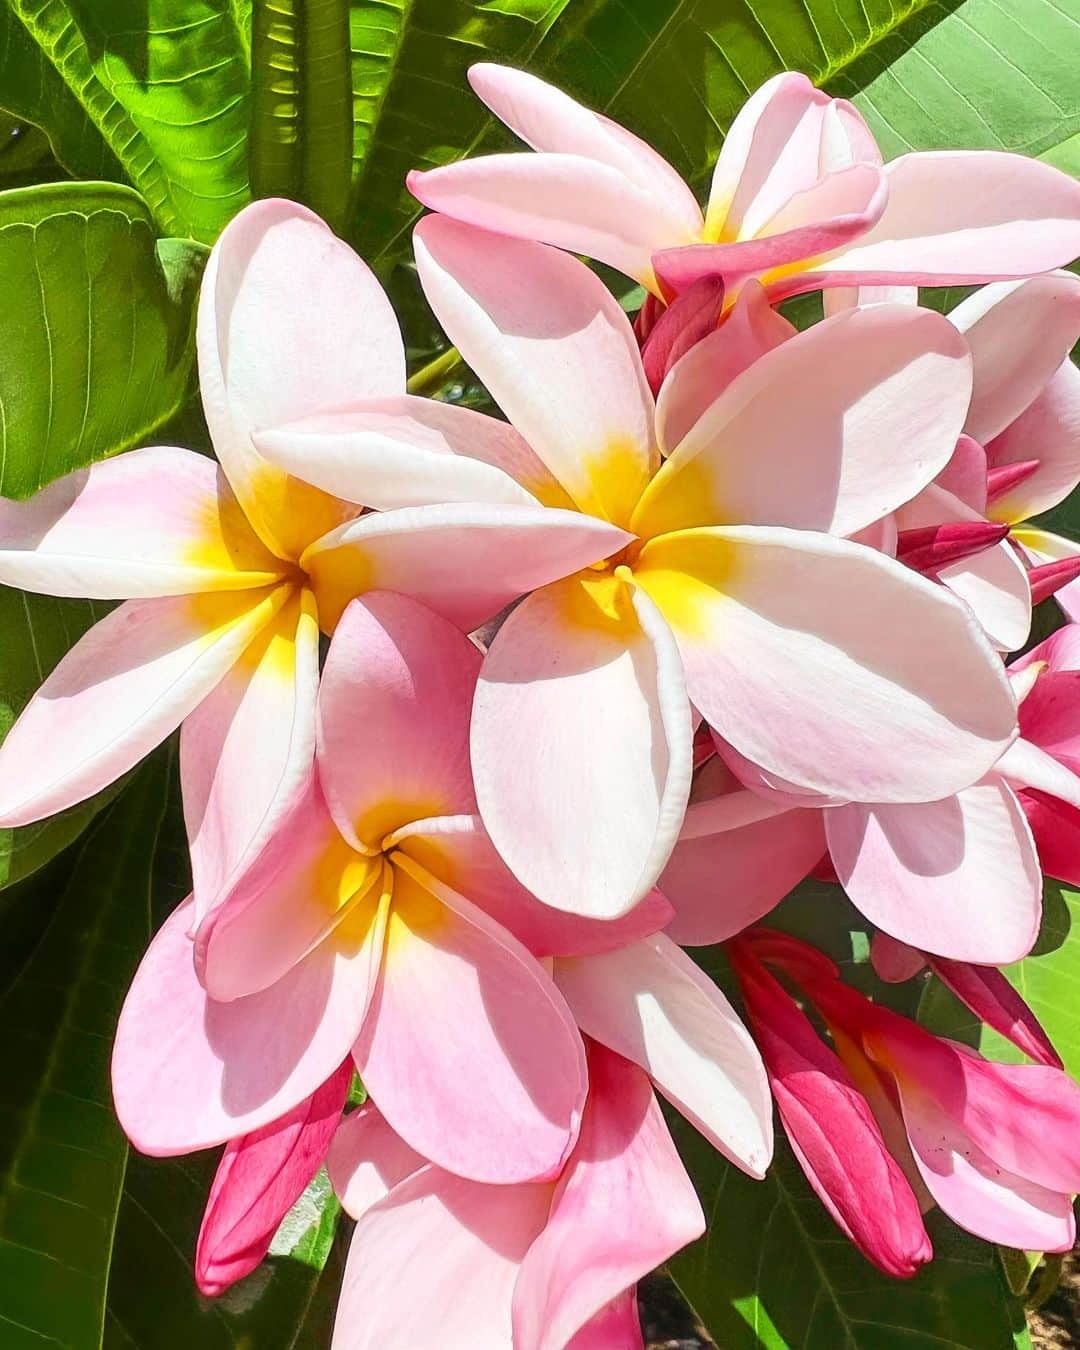 shihoのインスタグラム：「🩷🌼🩷🌼🩷 ・ いい香りが漂い、 見ているだけで可愛くて可愛くて ホッコリ癒されるプルメリアちゃん♡ ・ ハワイ語でプルメリアは 『Puamelia プアメリア』 〝大切な人の幸せを願う”  と言う意味が込められているの。 ・ 見た目だけではなく、 プルメリアに込められた意味も とっても素敵♡ ・ #hawaii#islandofoahu#oahu#ハワイ#trip #オアフ島#travel#loco_hawaii#travel_jp #funtorip#タビジョ#旅MUSE#genic_travel #genic_mag#たびねす#旅行#genic_hawaii #pulumeria#プルメリア#flowers#puamelia #tabijyomap_hawaii#lealeahawaii#2023」